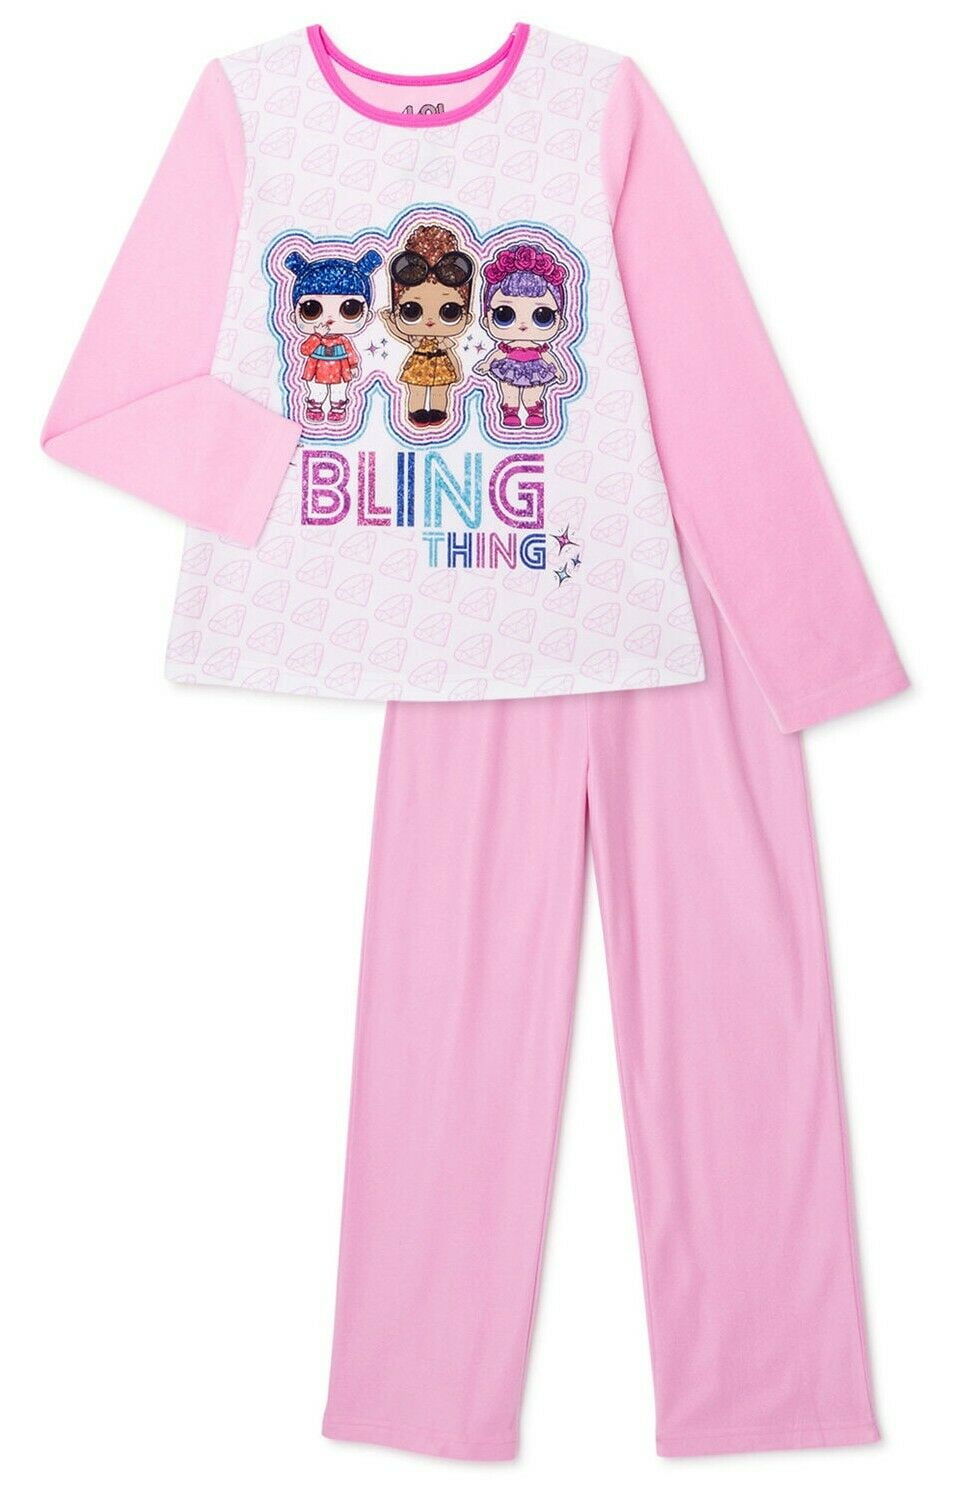 A M E LOL Surprise Girls Queen 2-Piece Pajamas